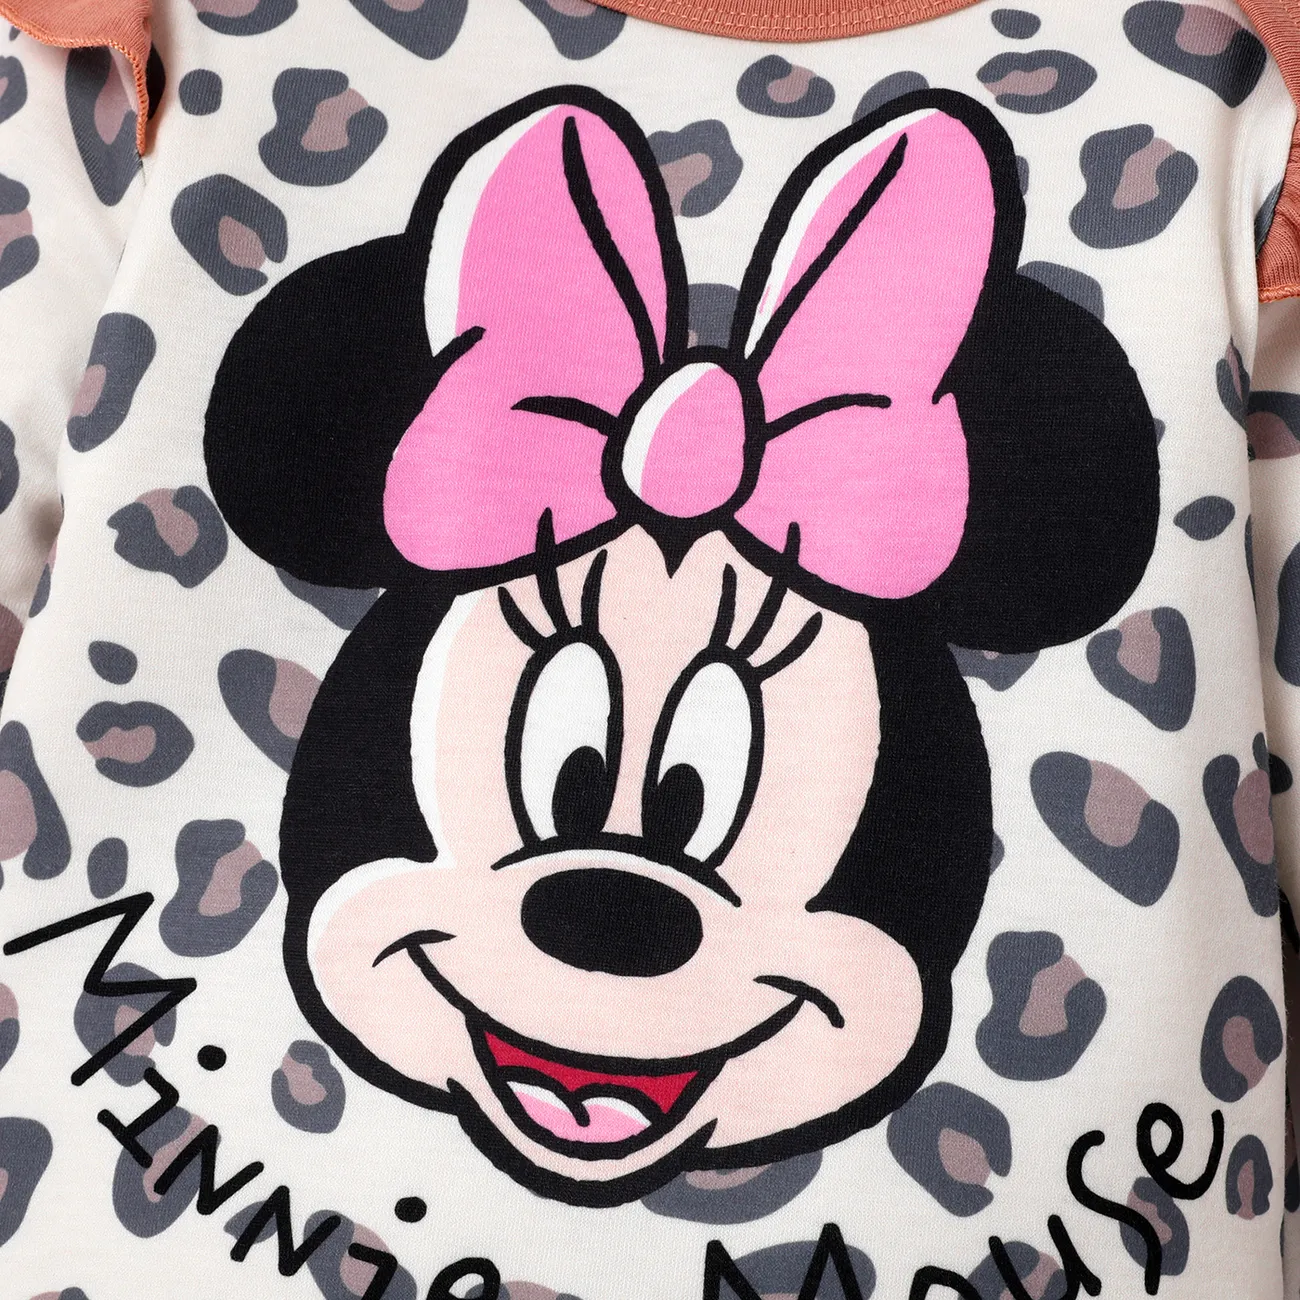 Disney Mickey and Friends Baby Girl 3pcs Character Print Leopard Long-sleeve Onesies & Pants & Headband Set  Khaki big image 1